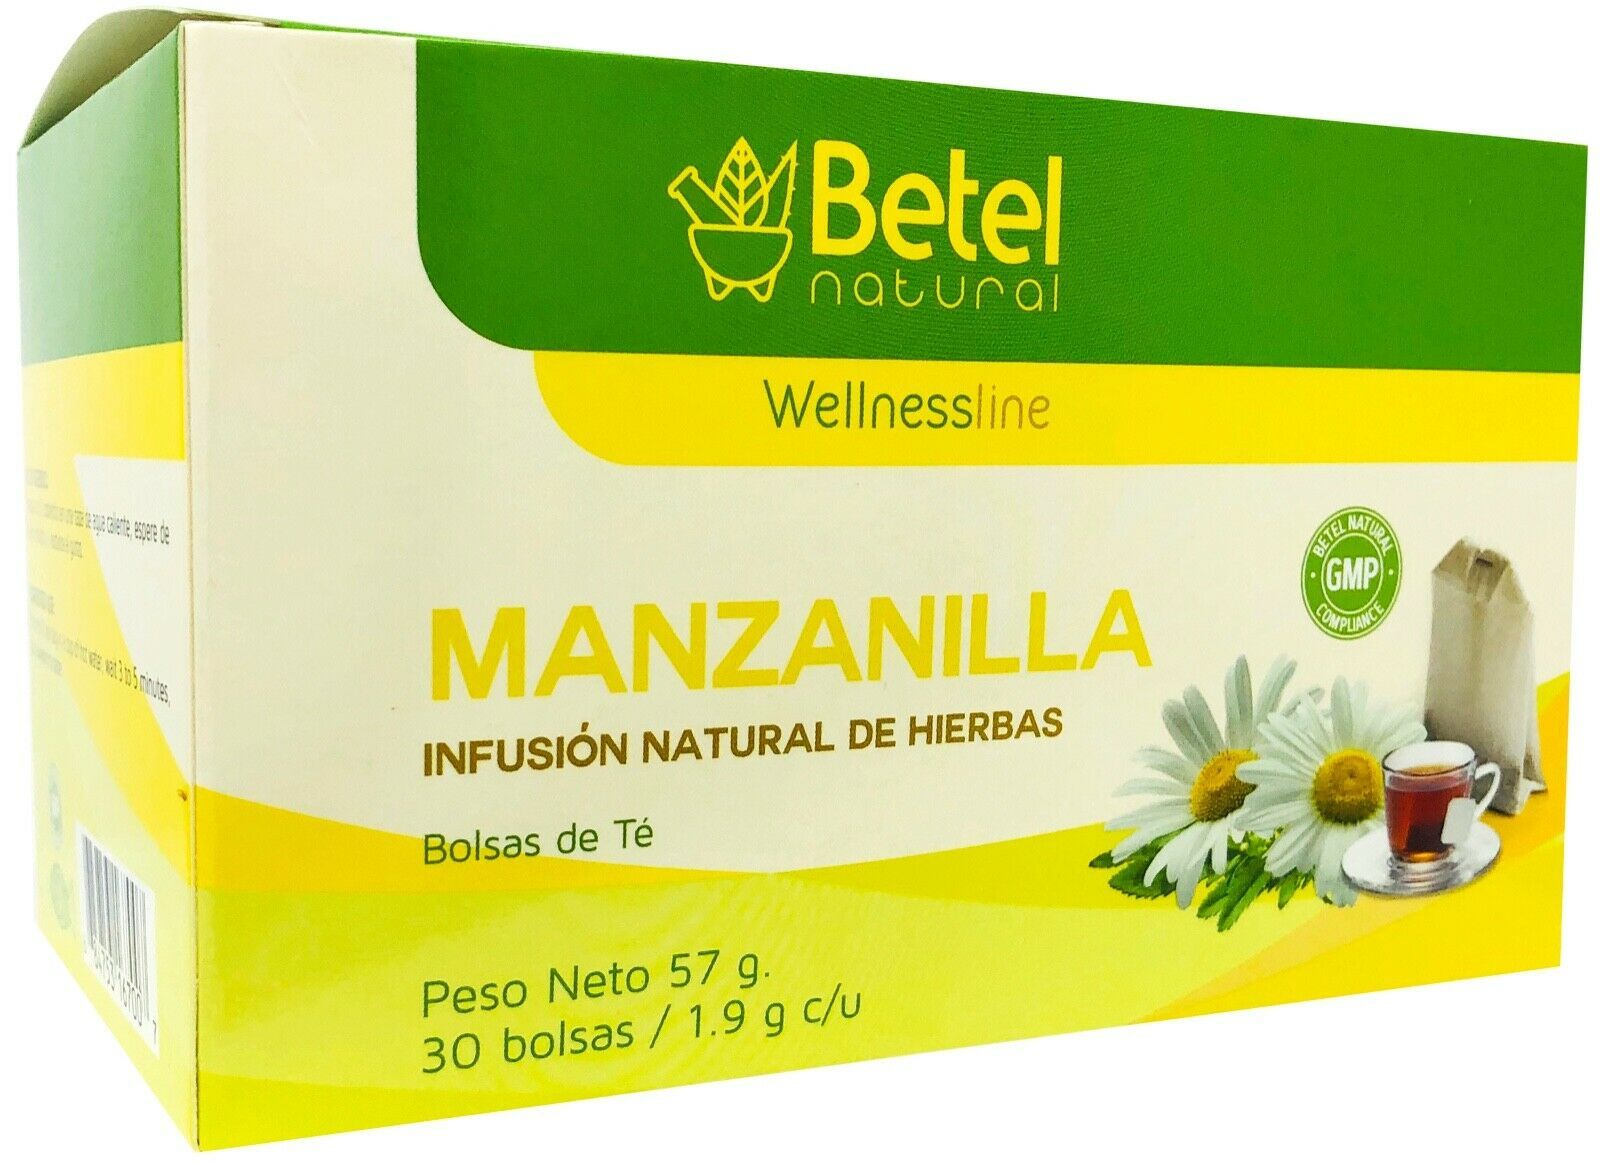 Premium Chamomile Tea - Te de Manzanilla by Betel Natural - 30 Tea Bags - $9.95